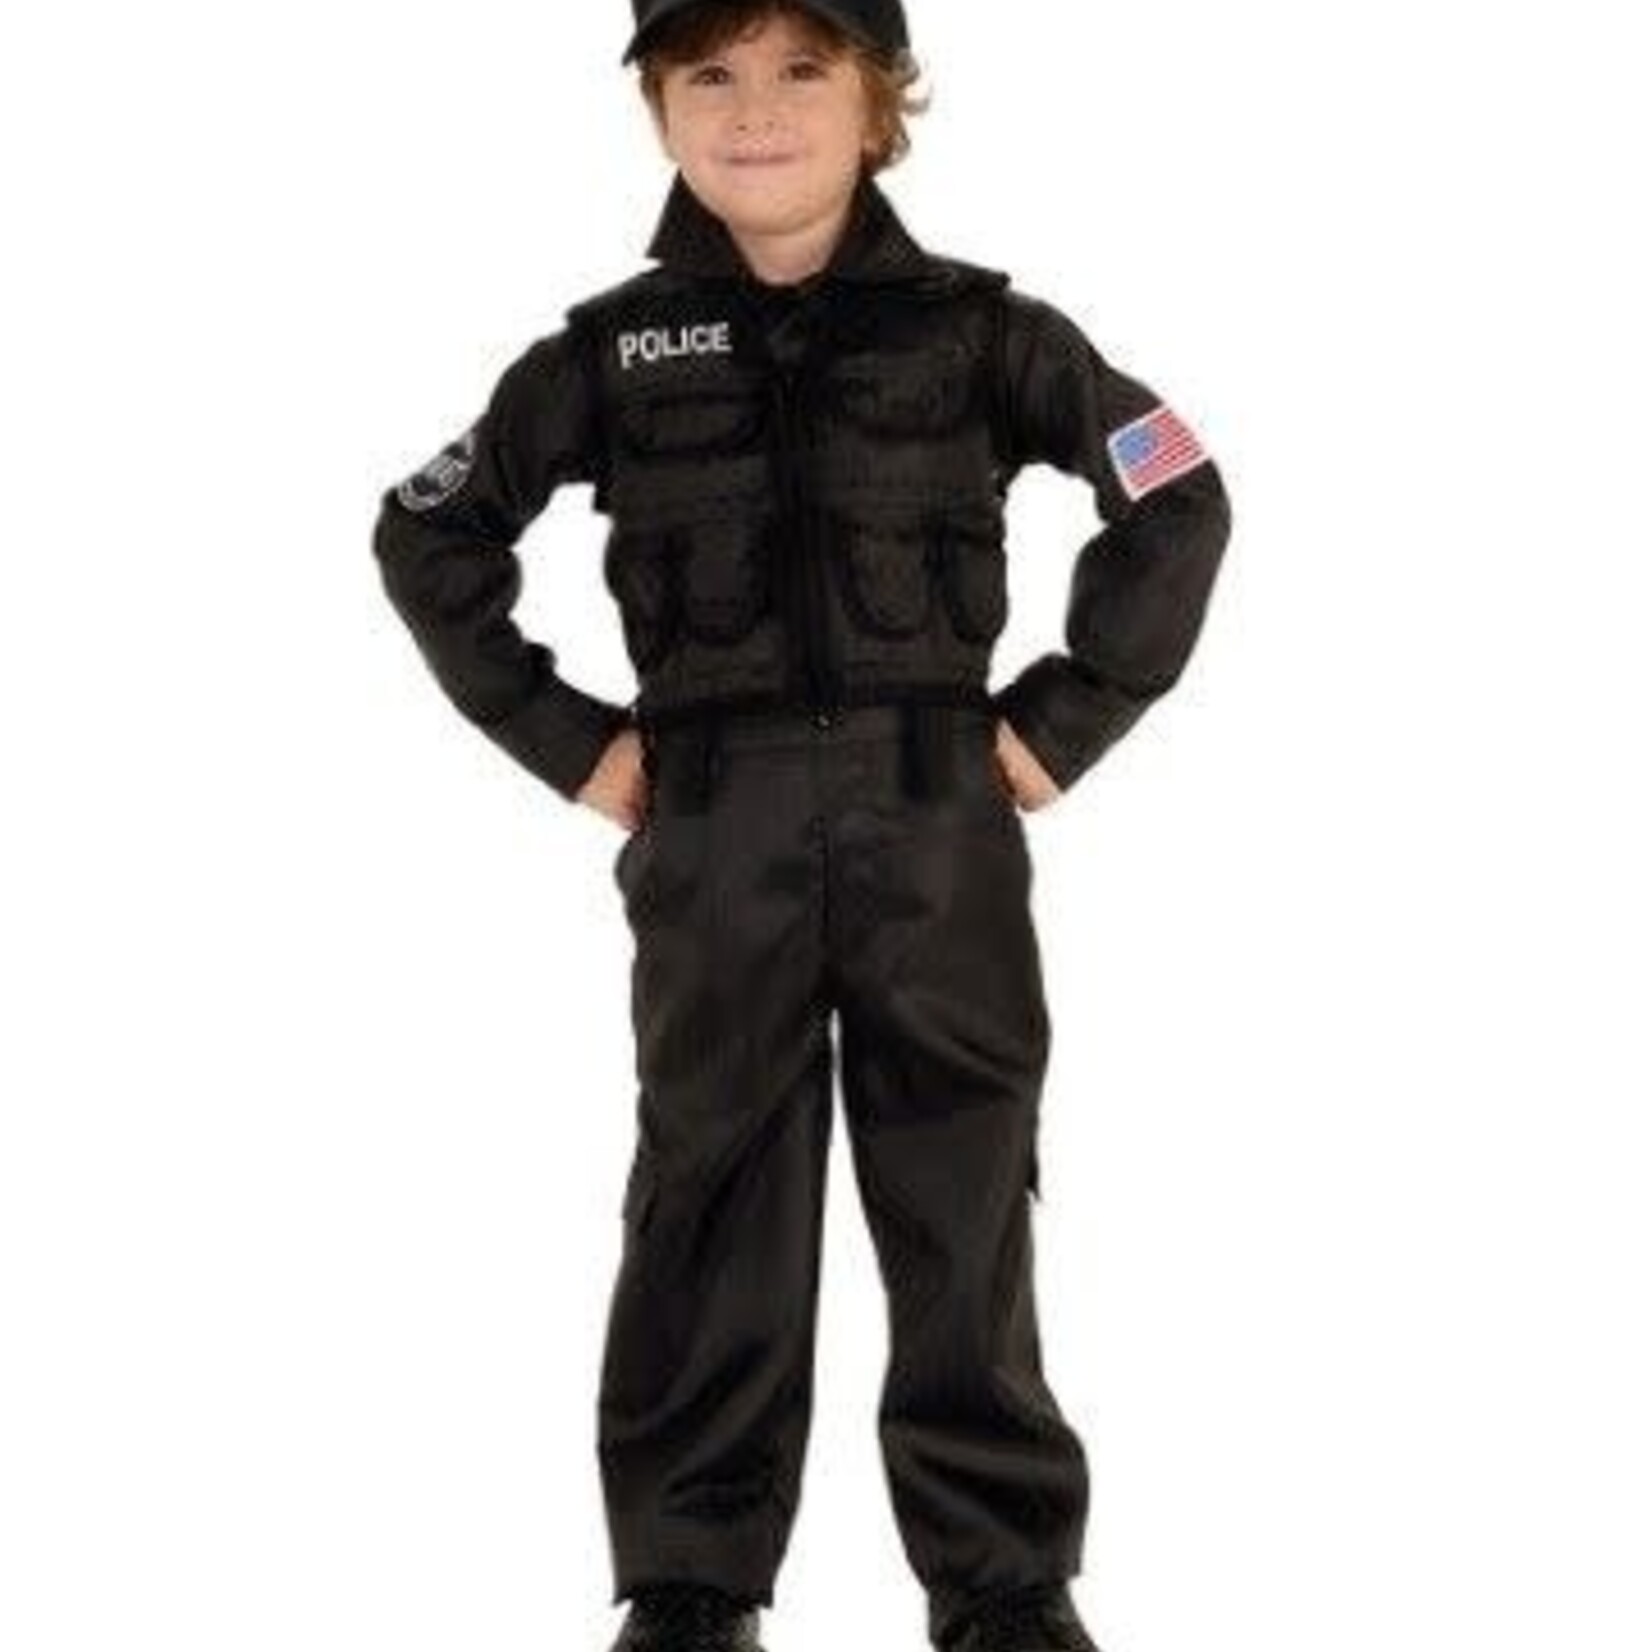 S.W.A.T. Police Costume - Kids